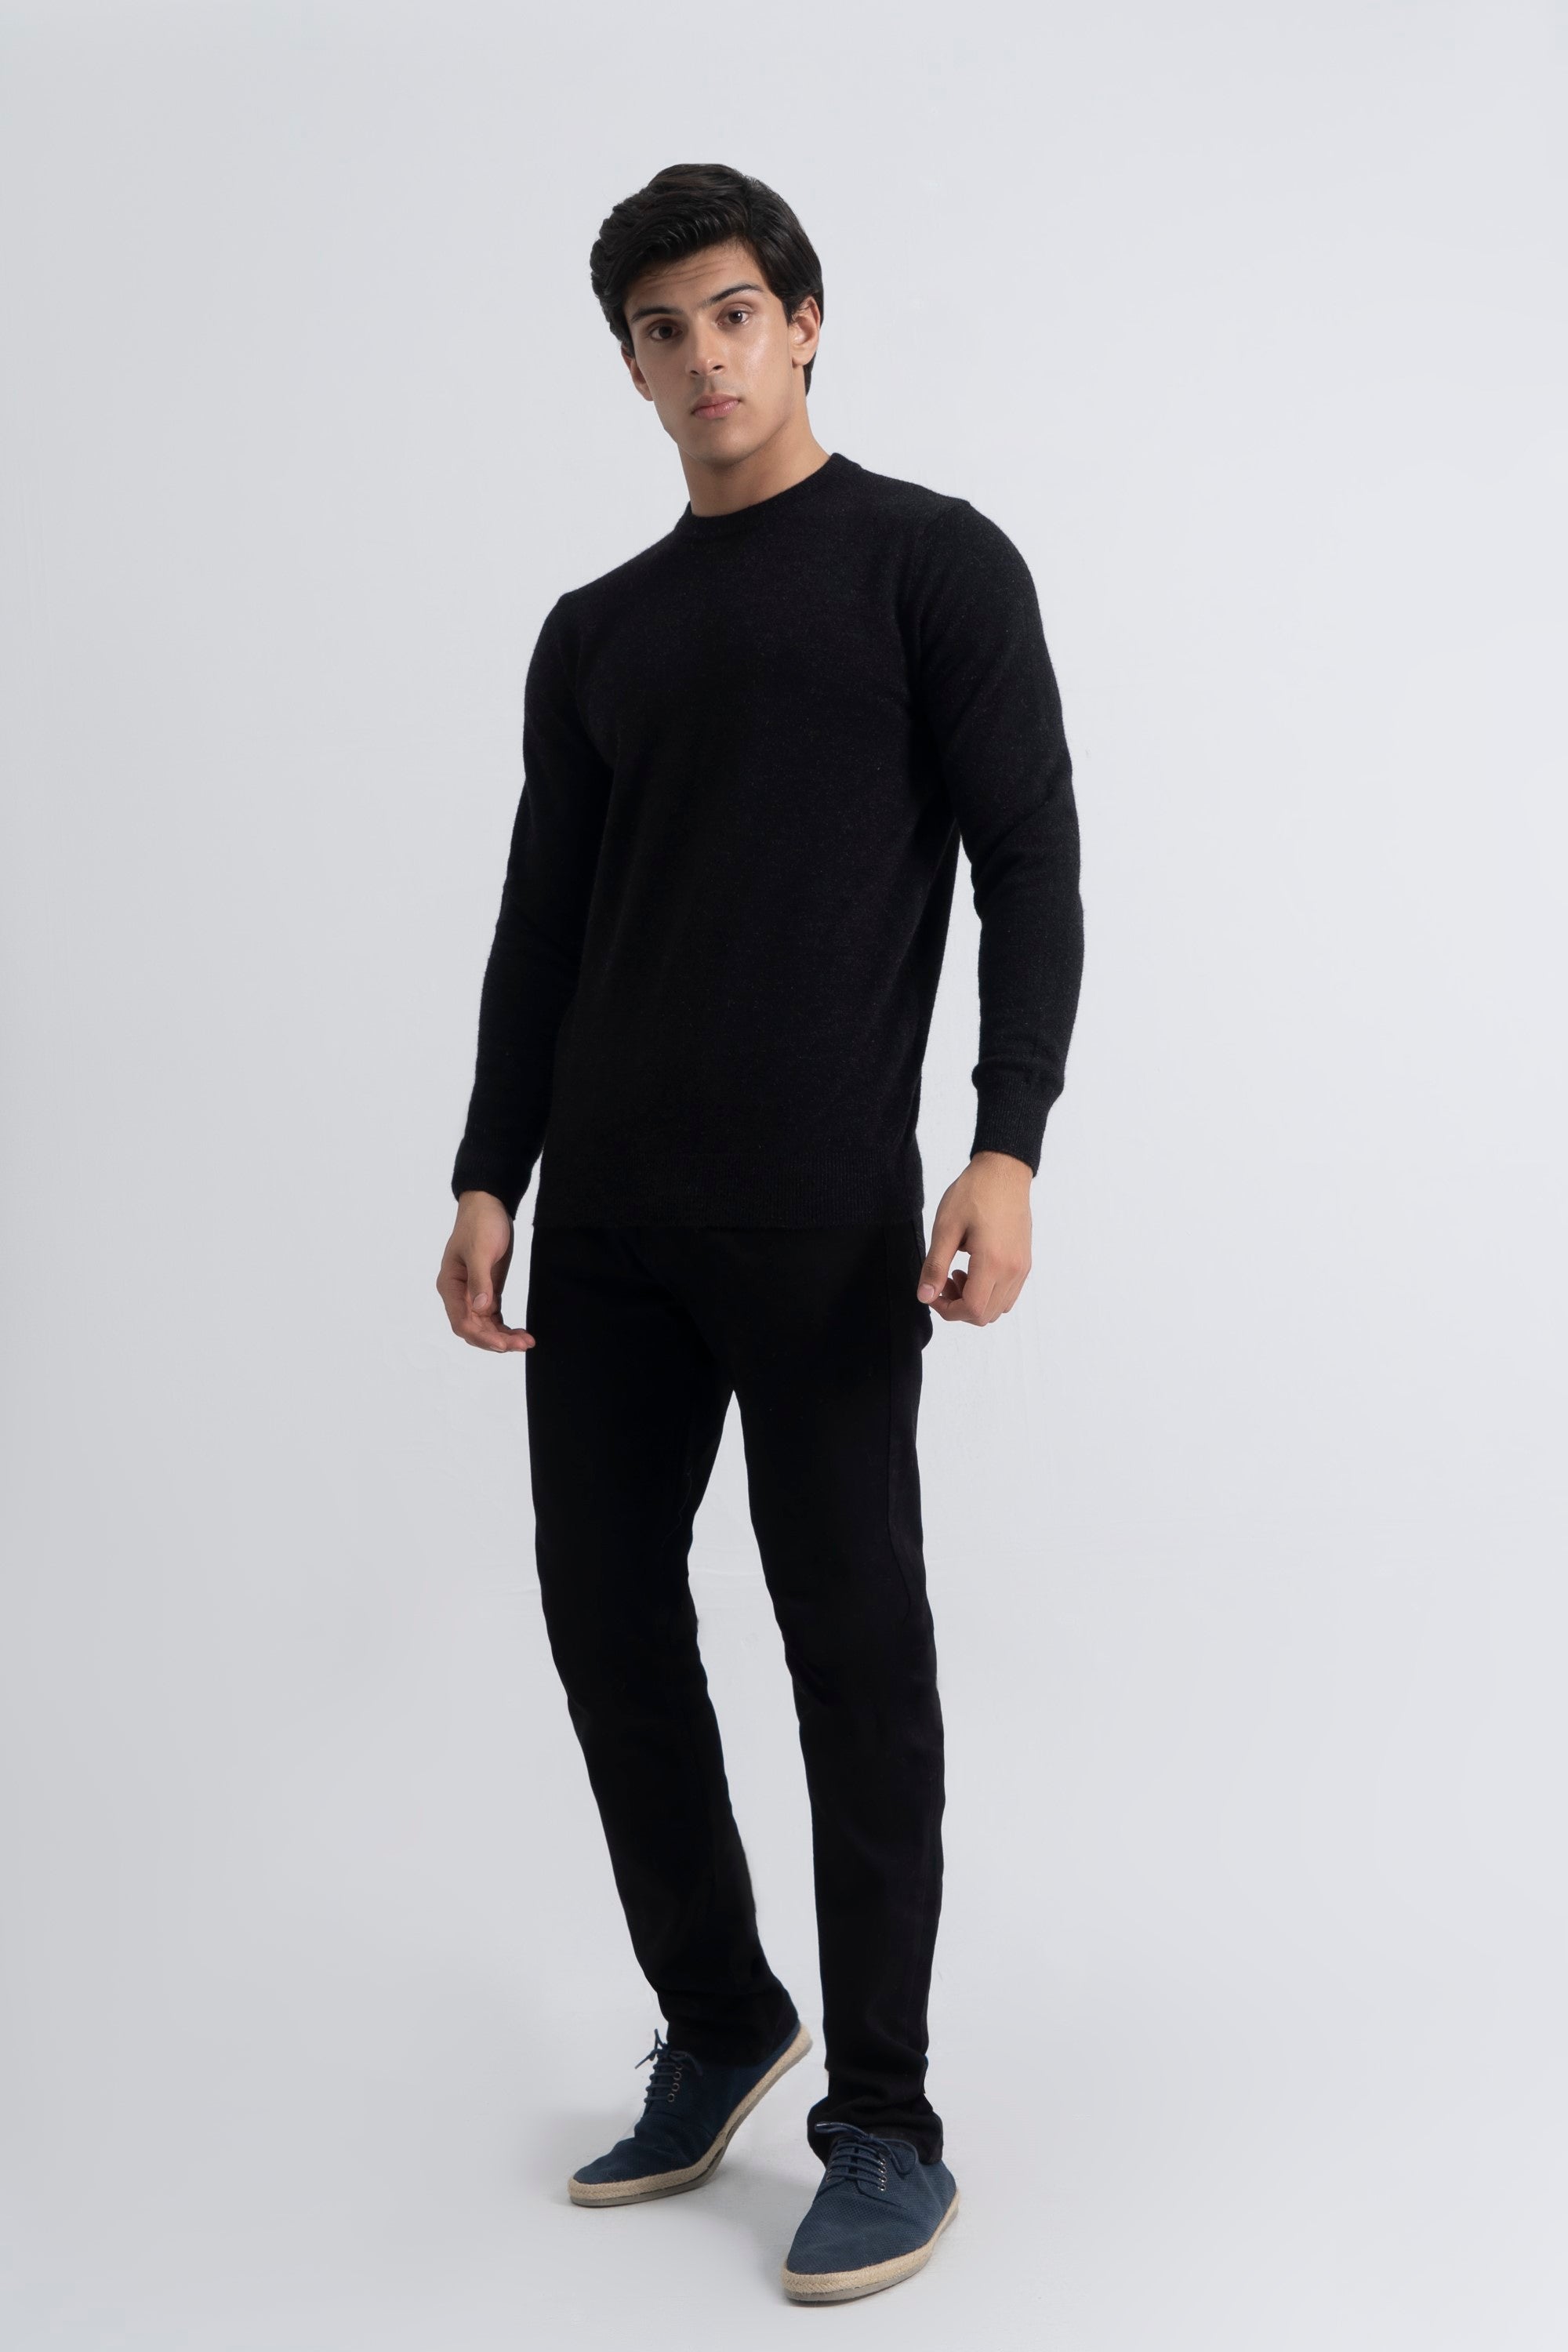 Black Acrylic Sweater Round Neck